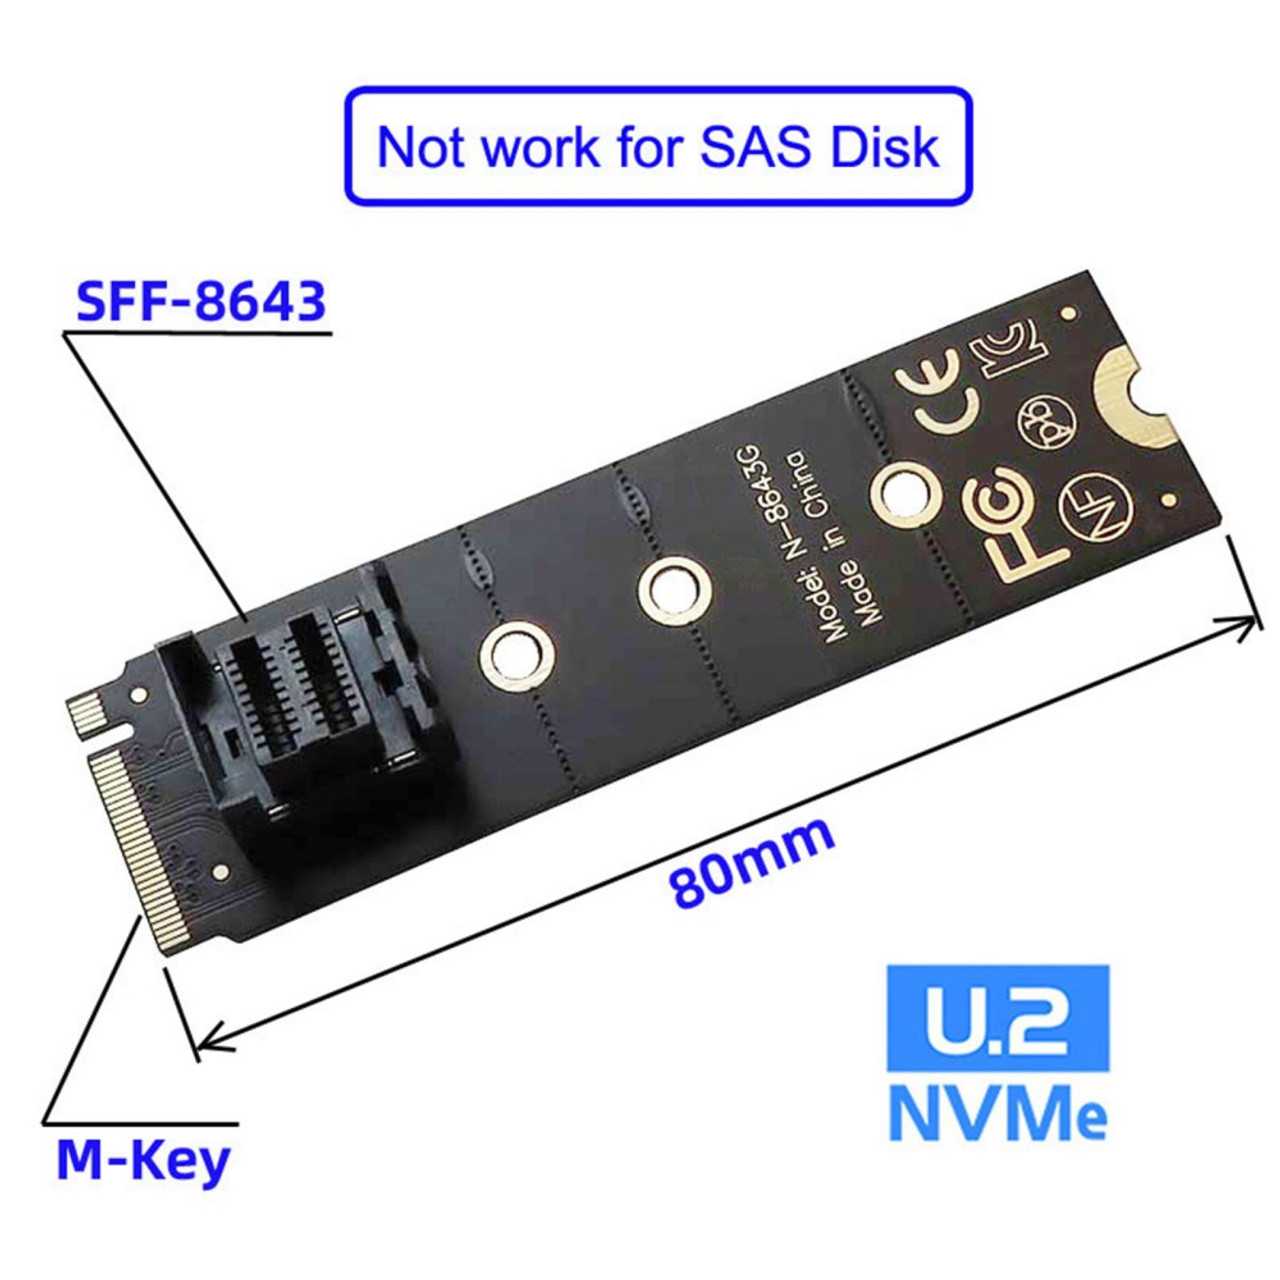 EN-Labs U.2 to M.2 NVMe M-Key NVMe Adapter,M2 to Mini SAS SFF-8643